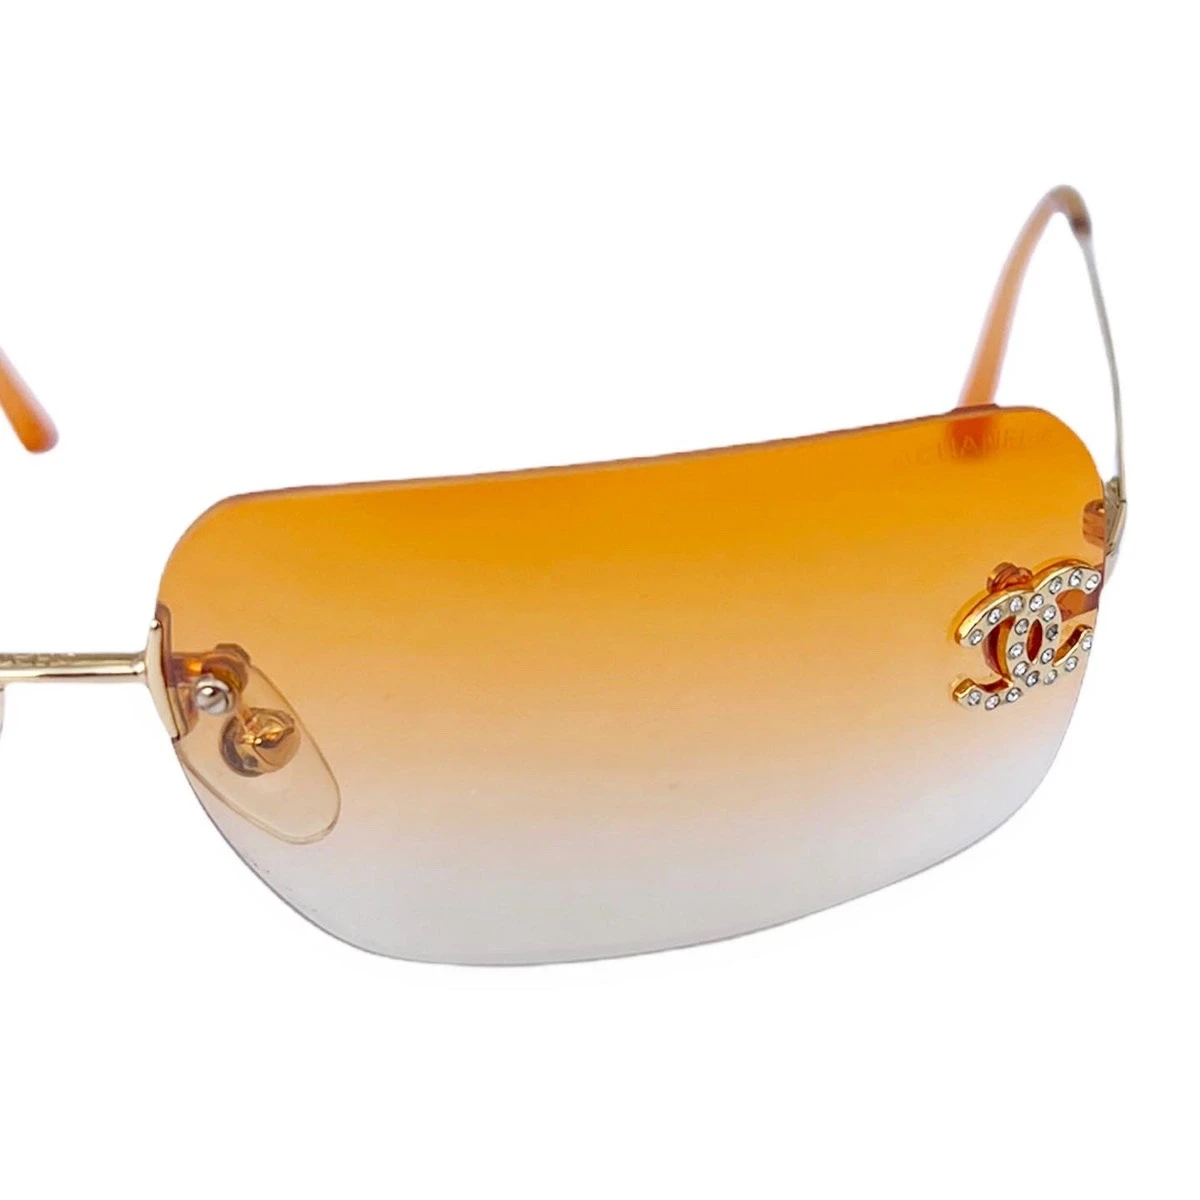 Chanel Chanel Rhinestone Gold Orange Tinted Sunglasses 4017-D